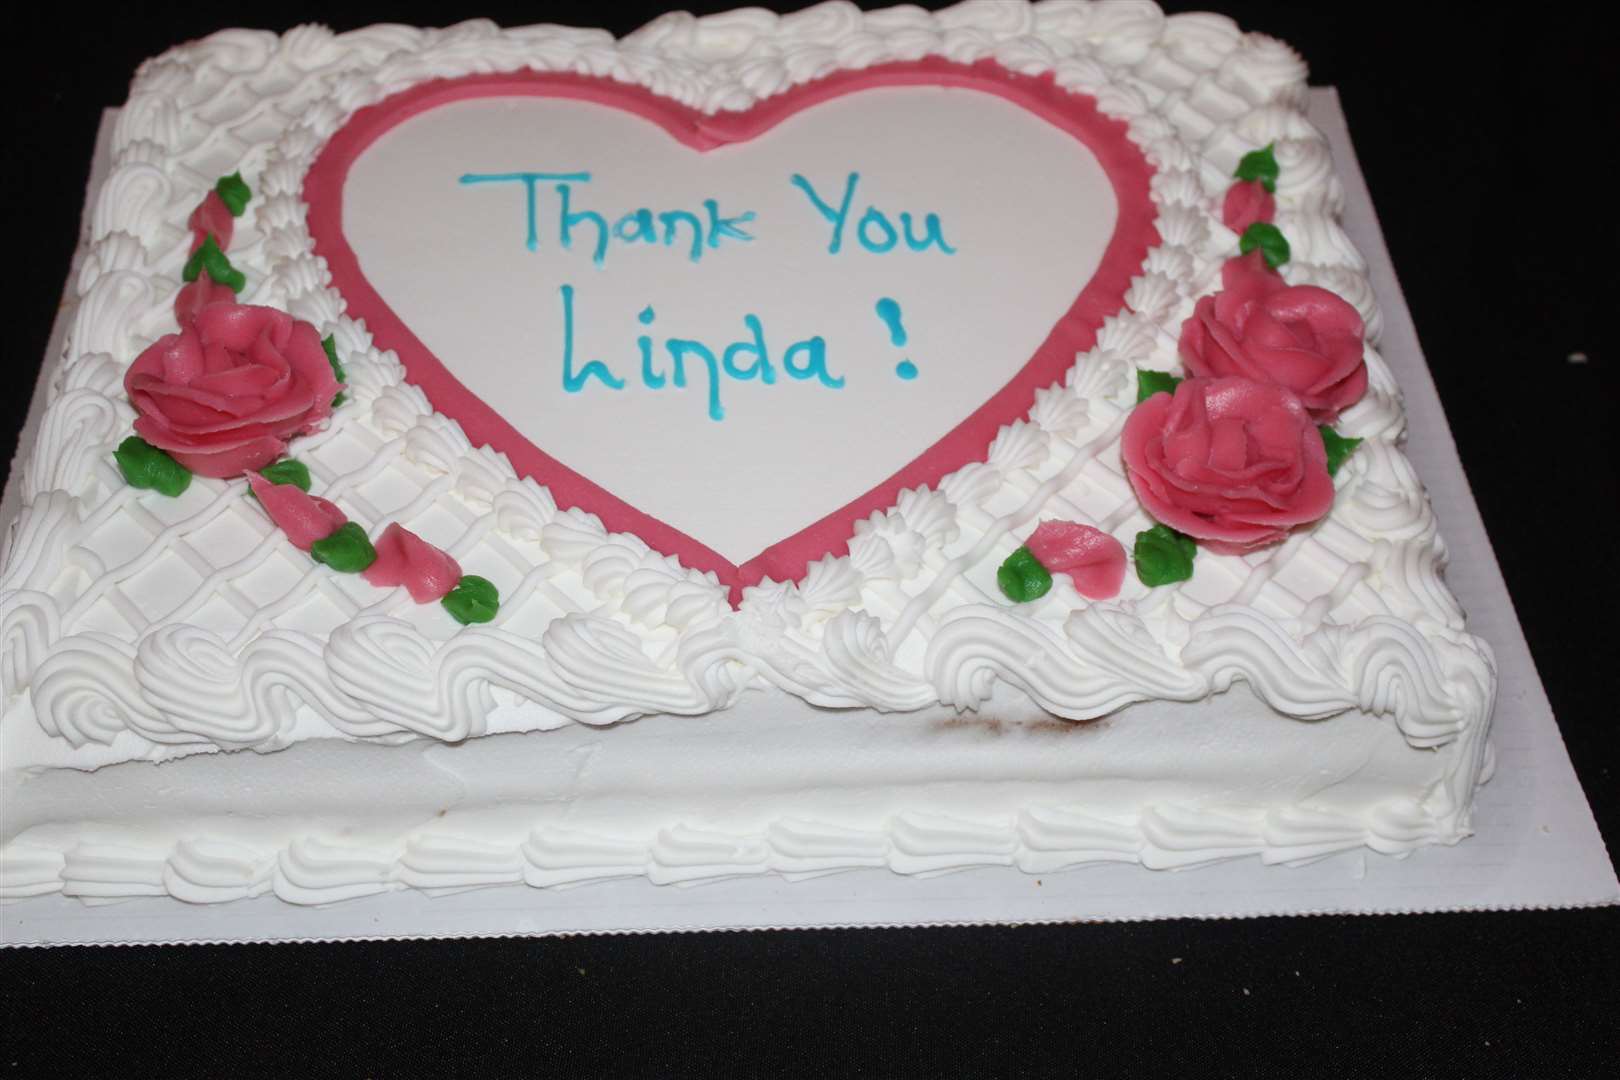 Linda's retirement cake